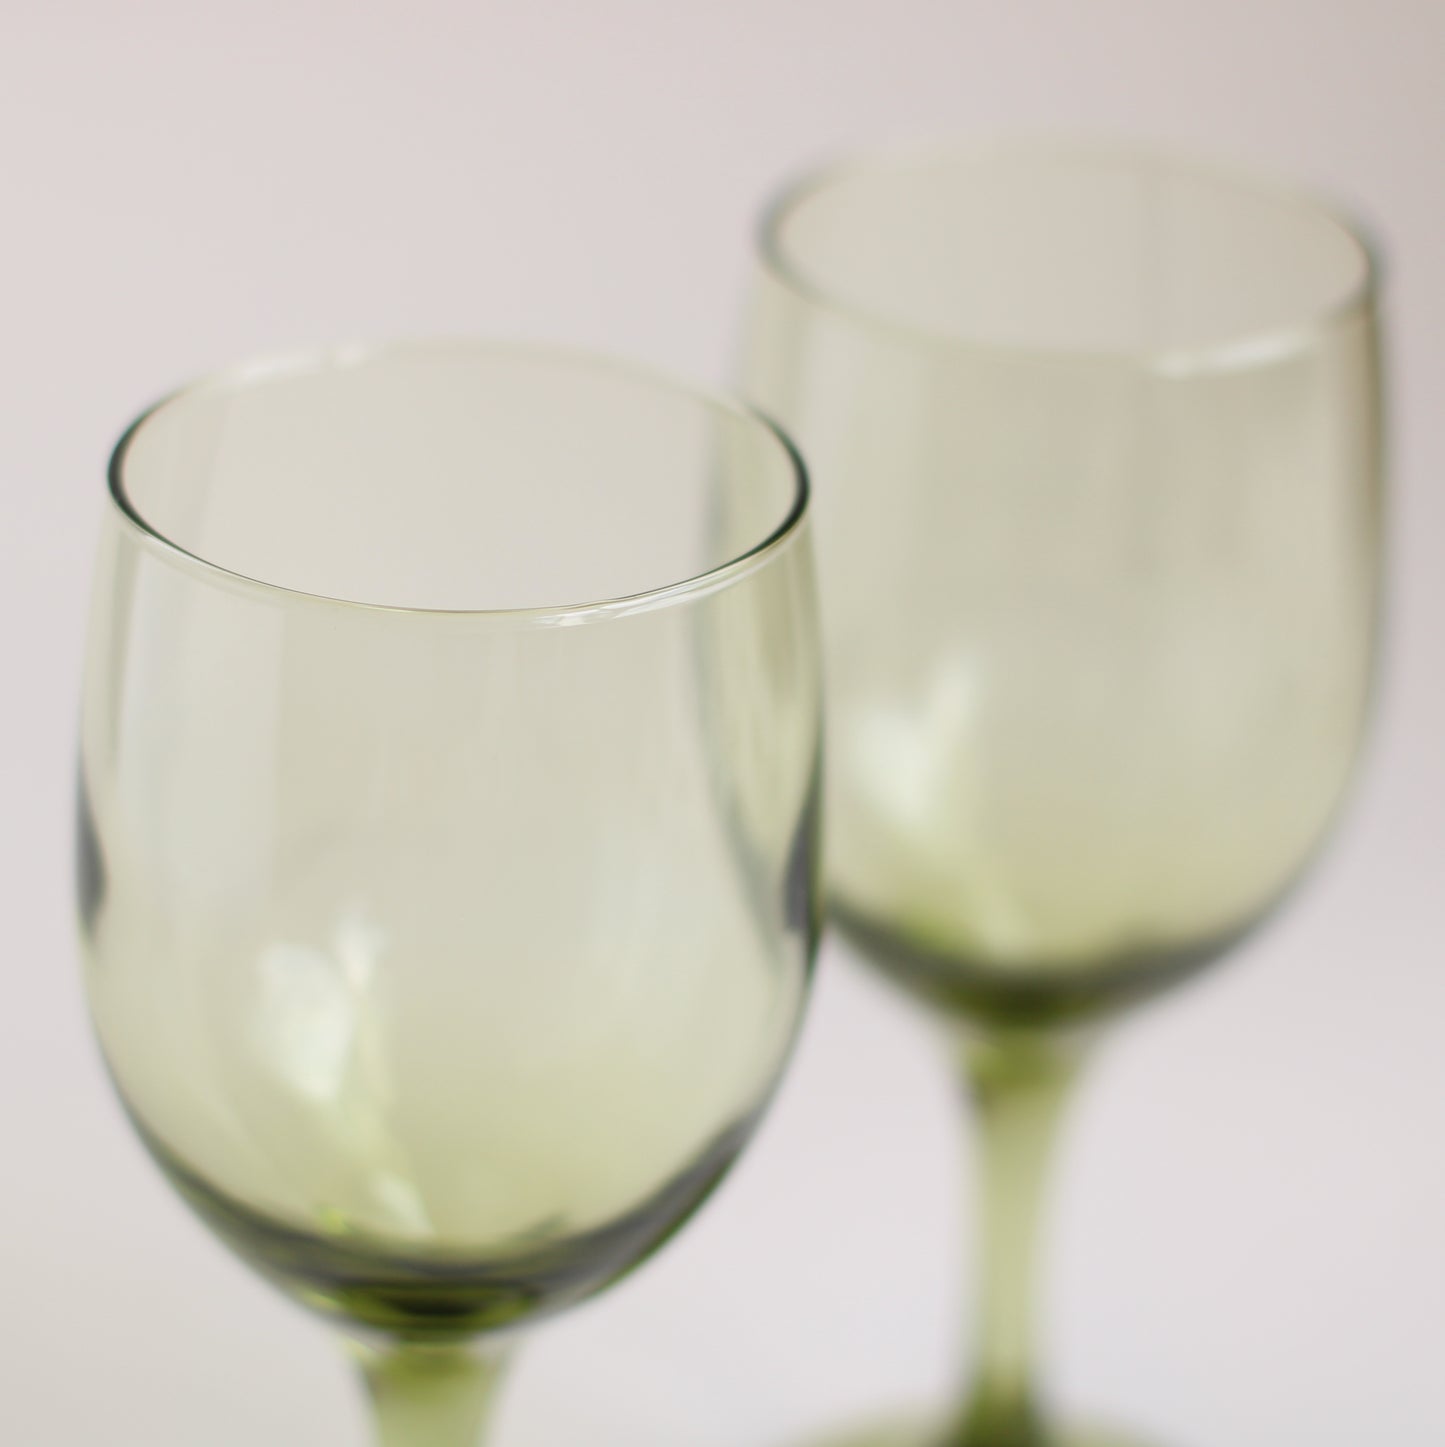 Pair of Green Wine Glasses